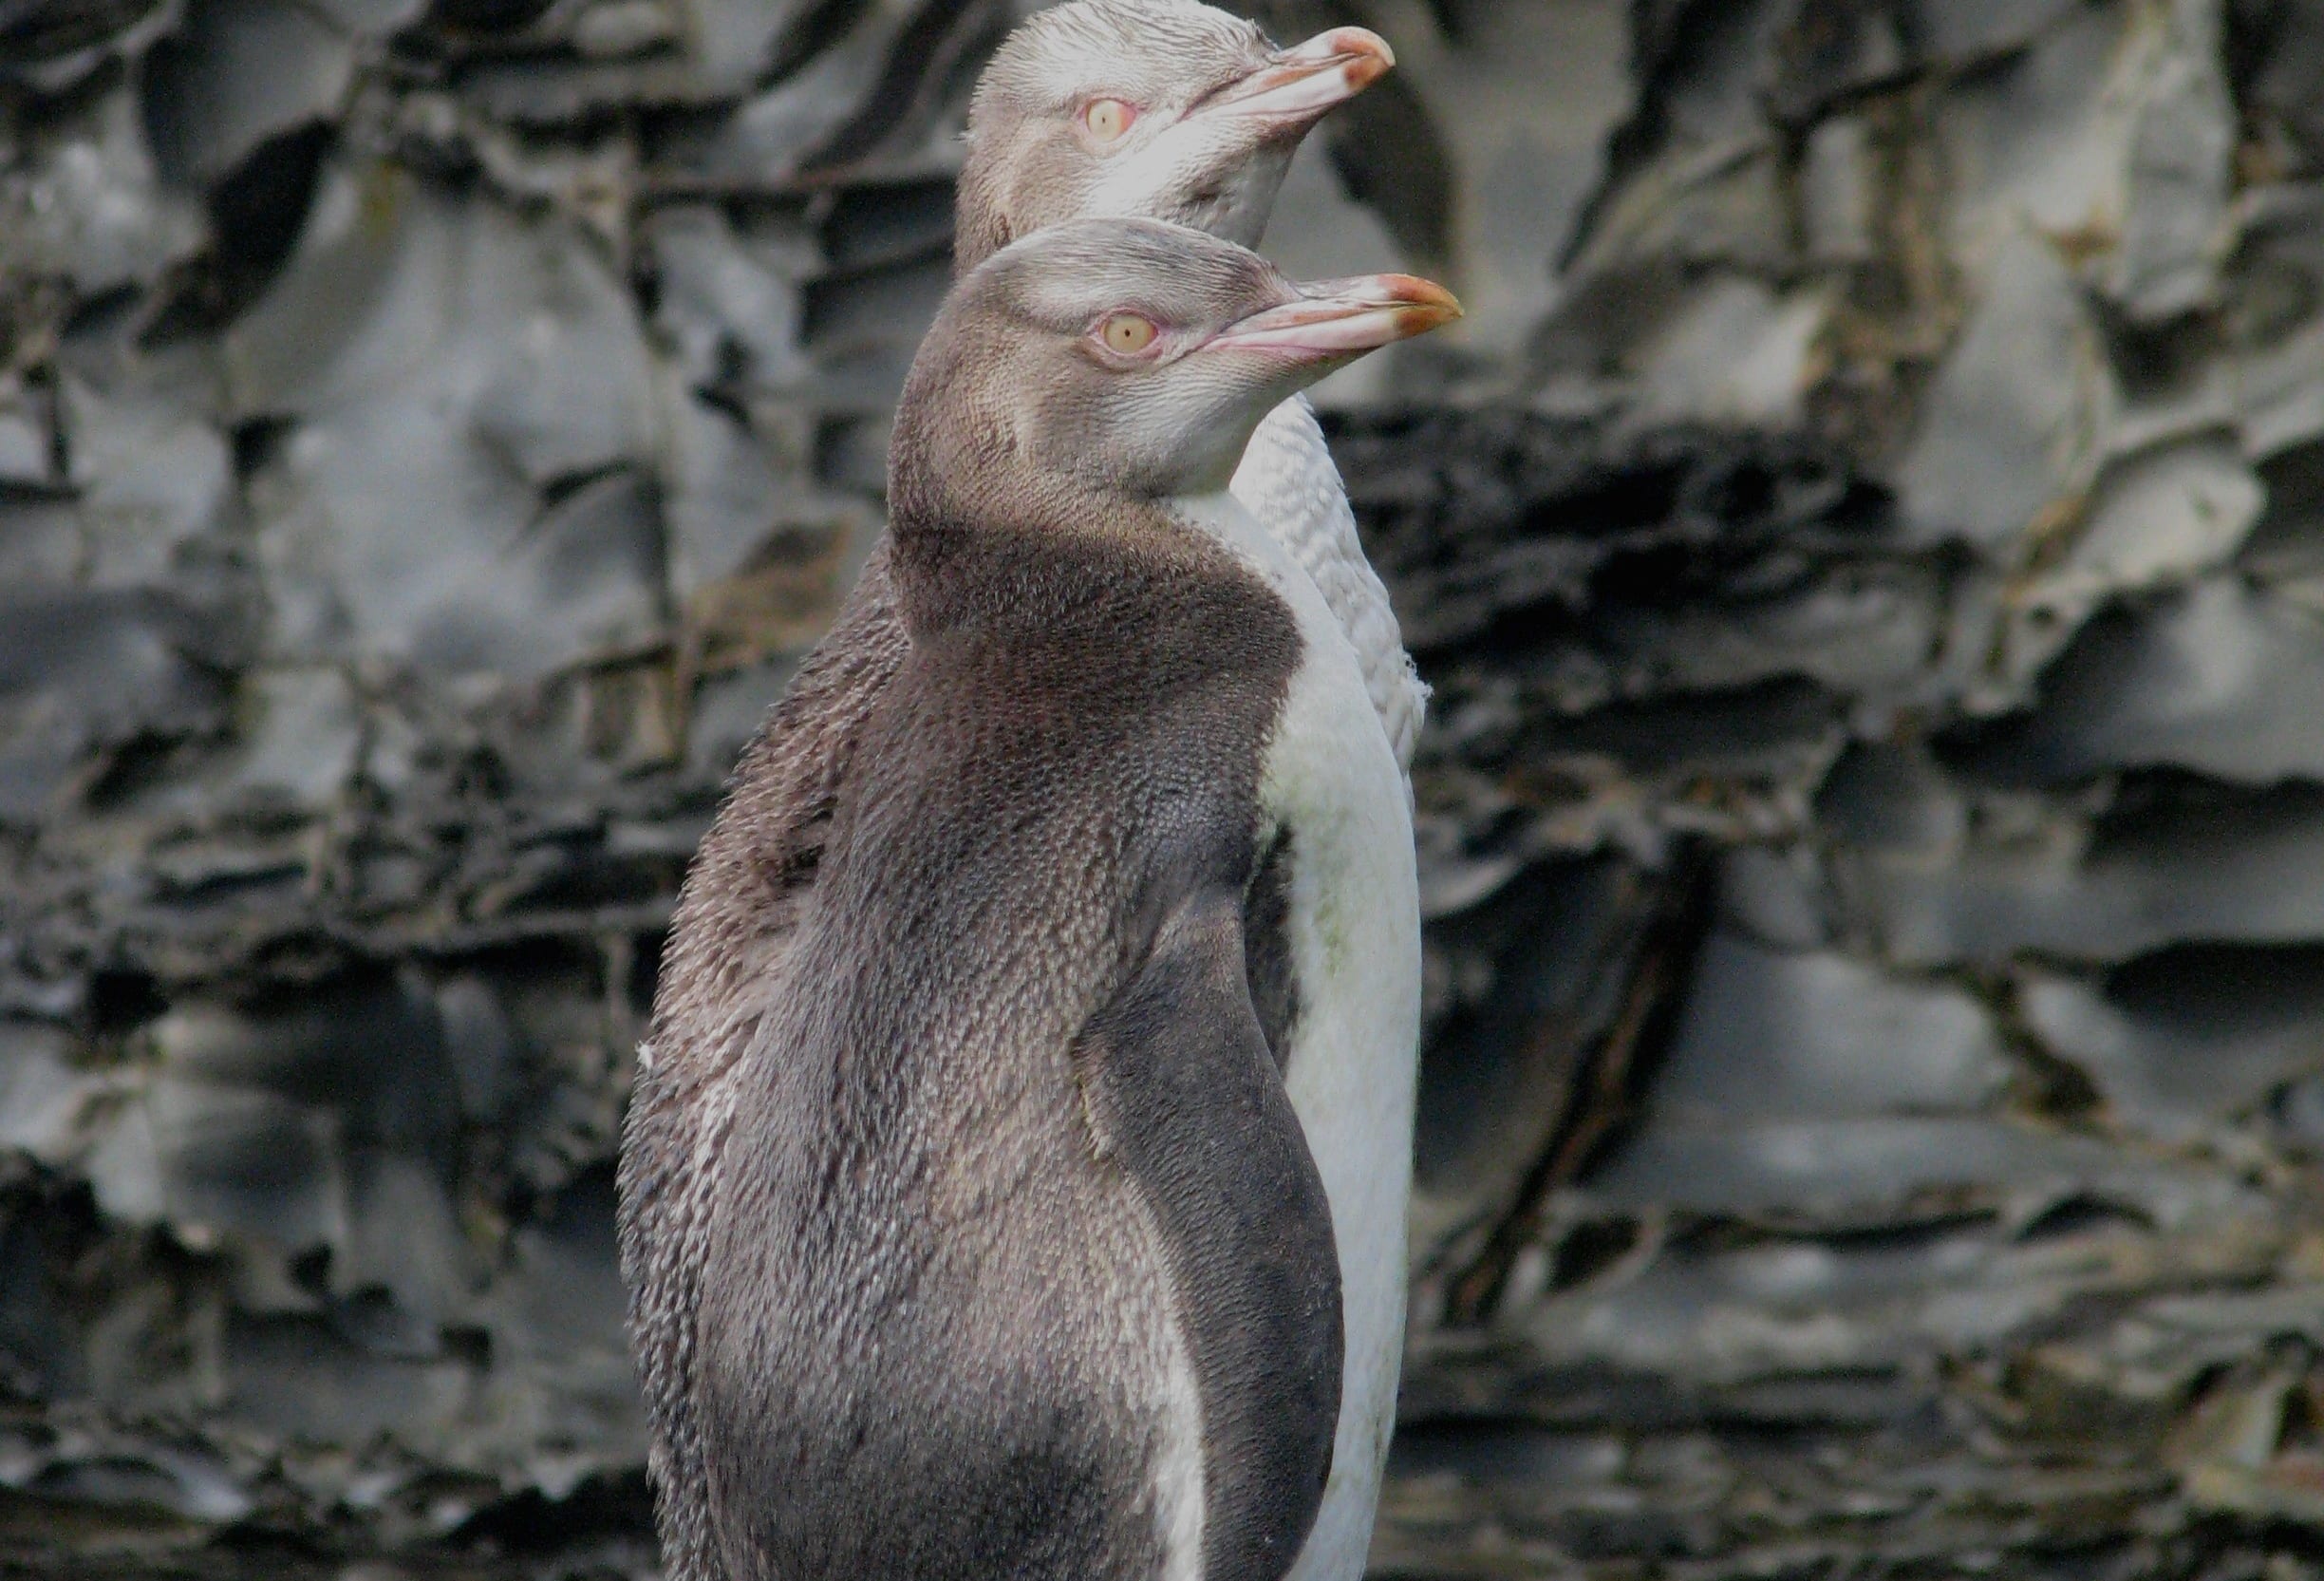 Two juvenile yellow-eyed penguins